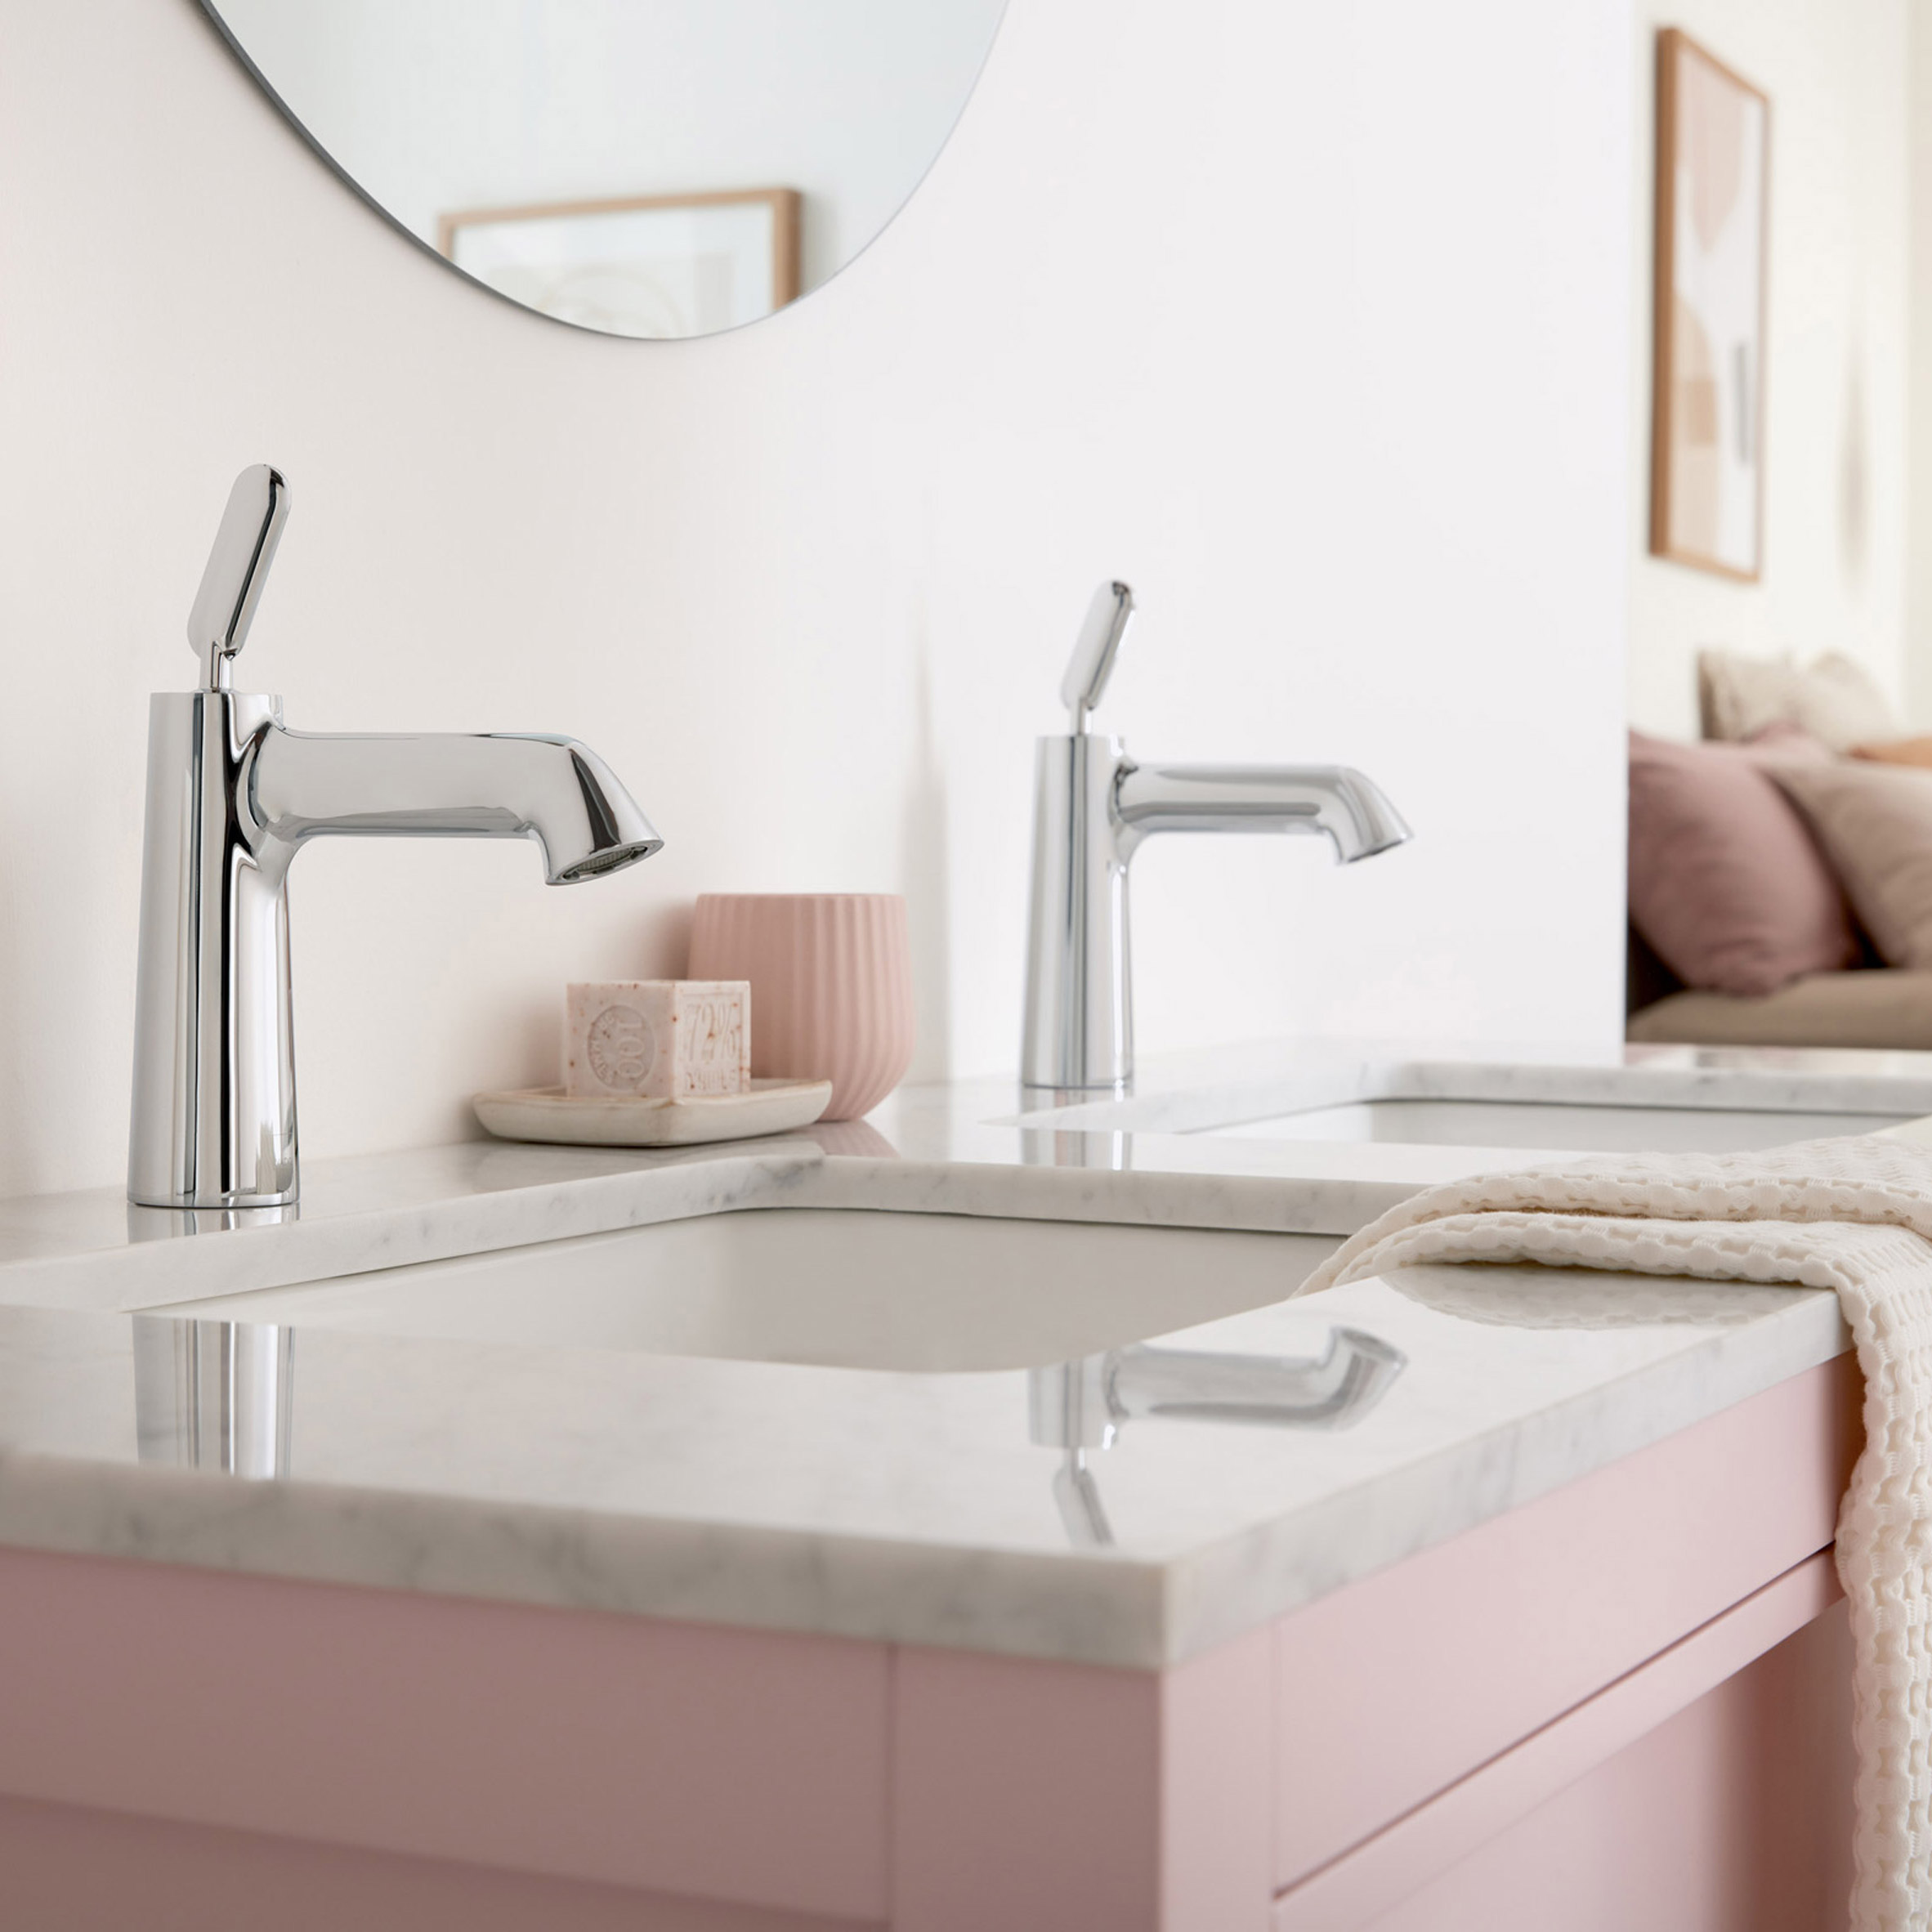 Two silver Arrondi taps on a pink sink